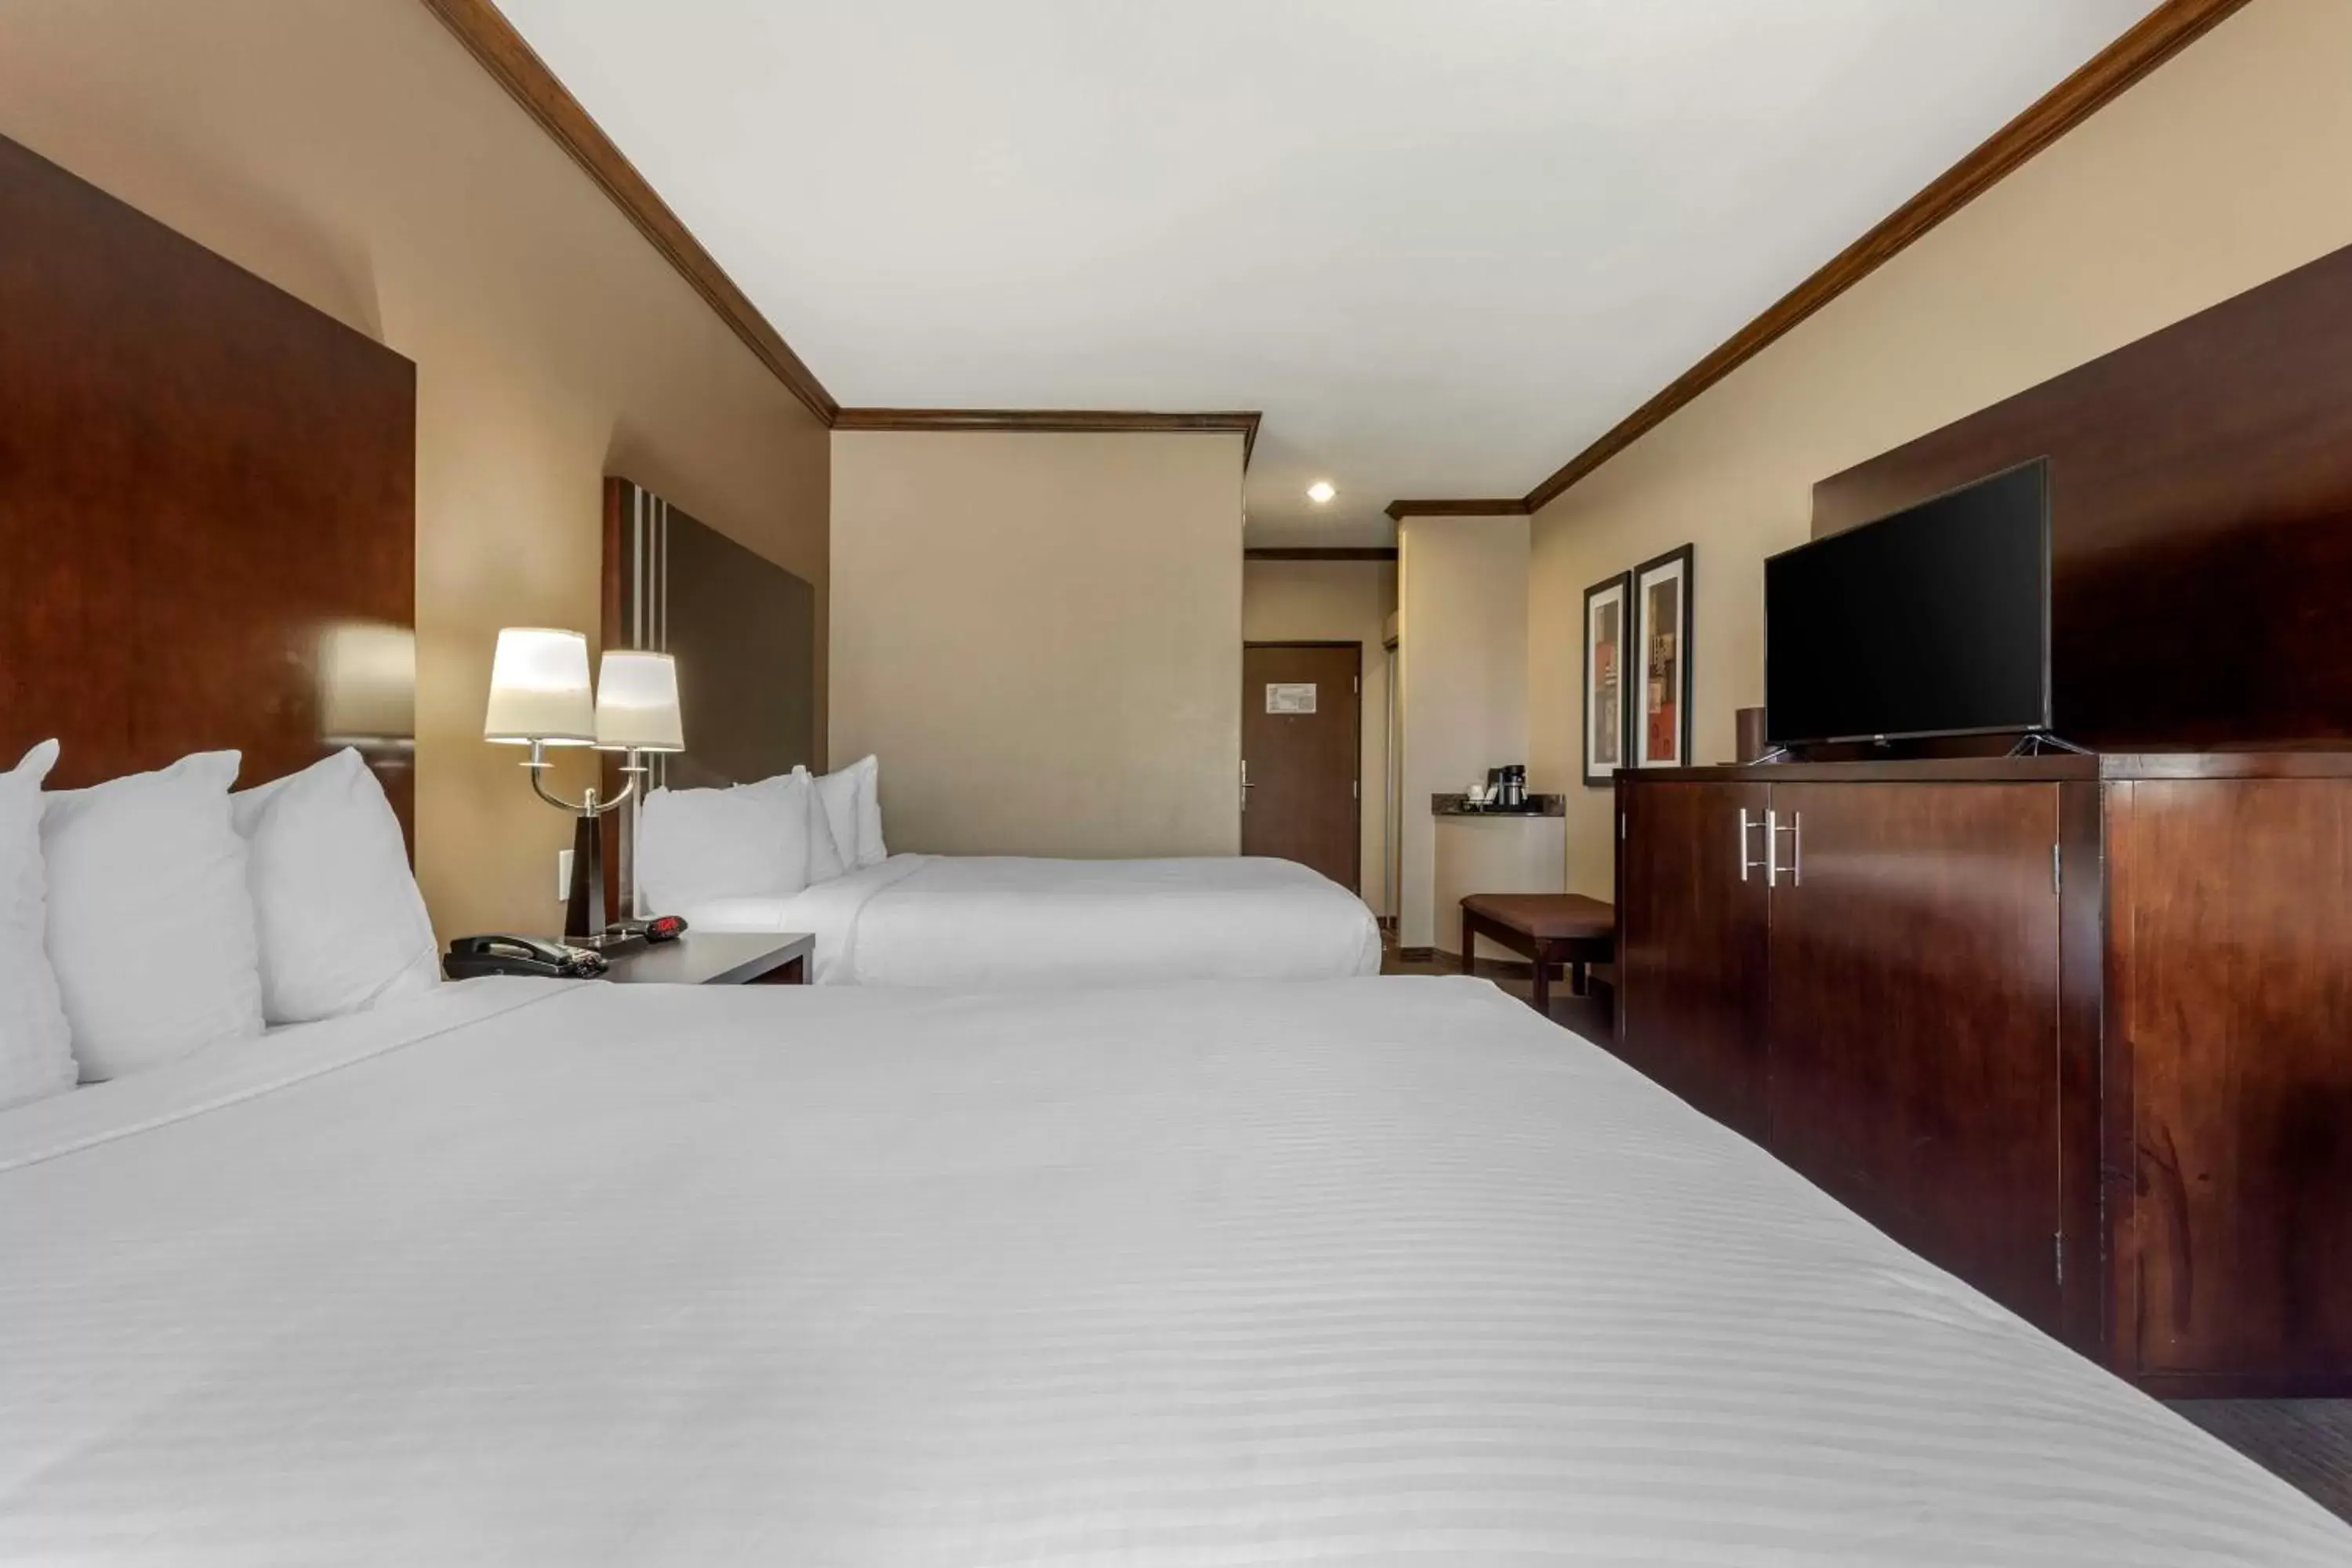 Bedroom, Bed in Best Western Plus Hotel and Suites Denison